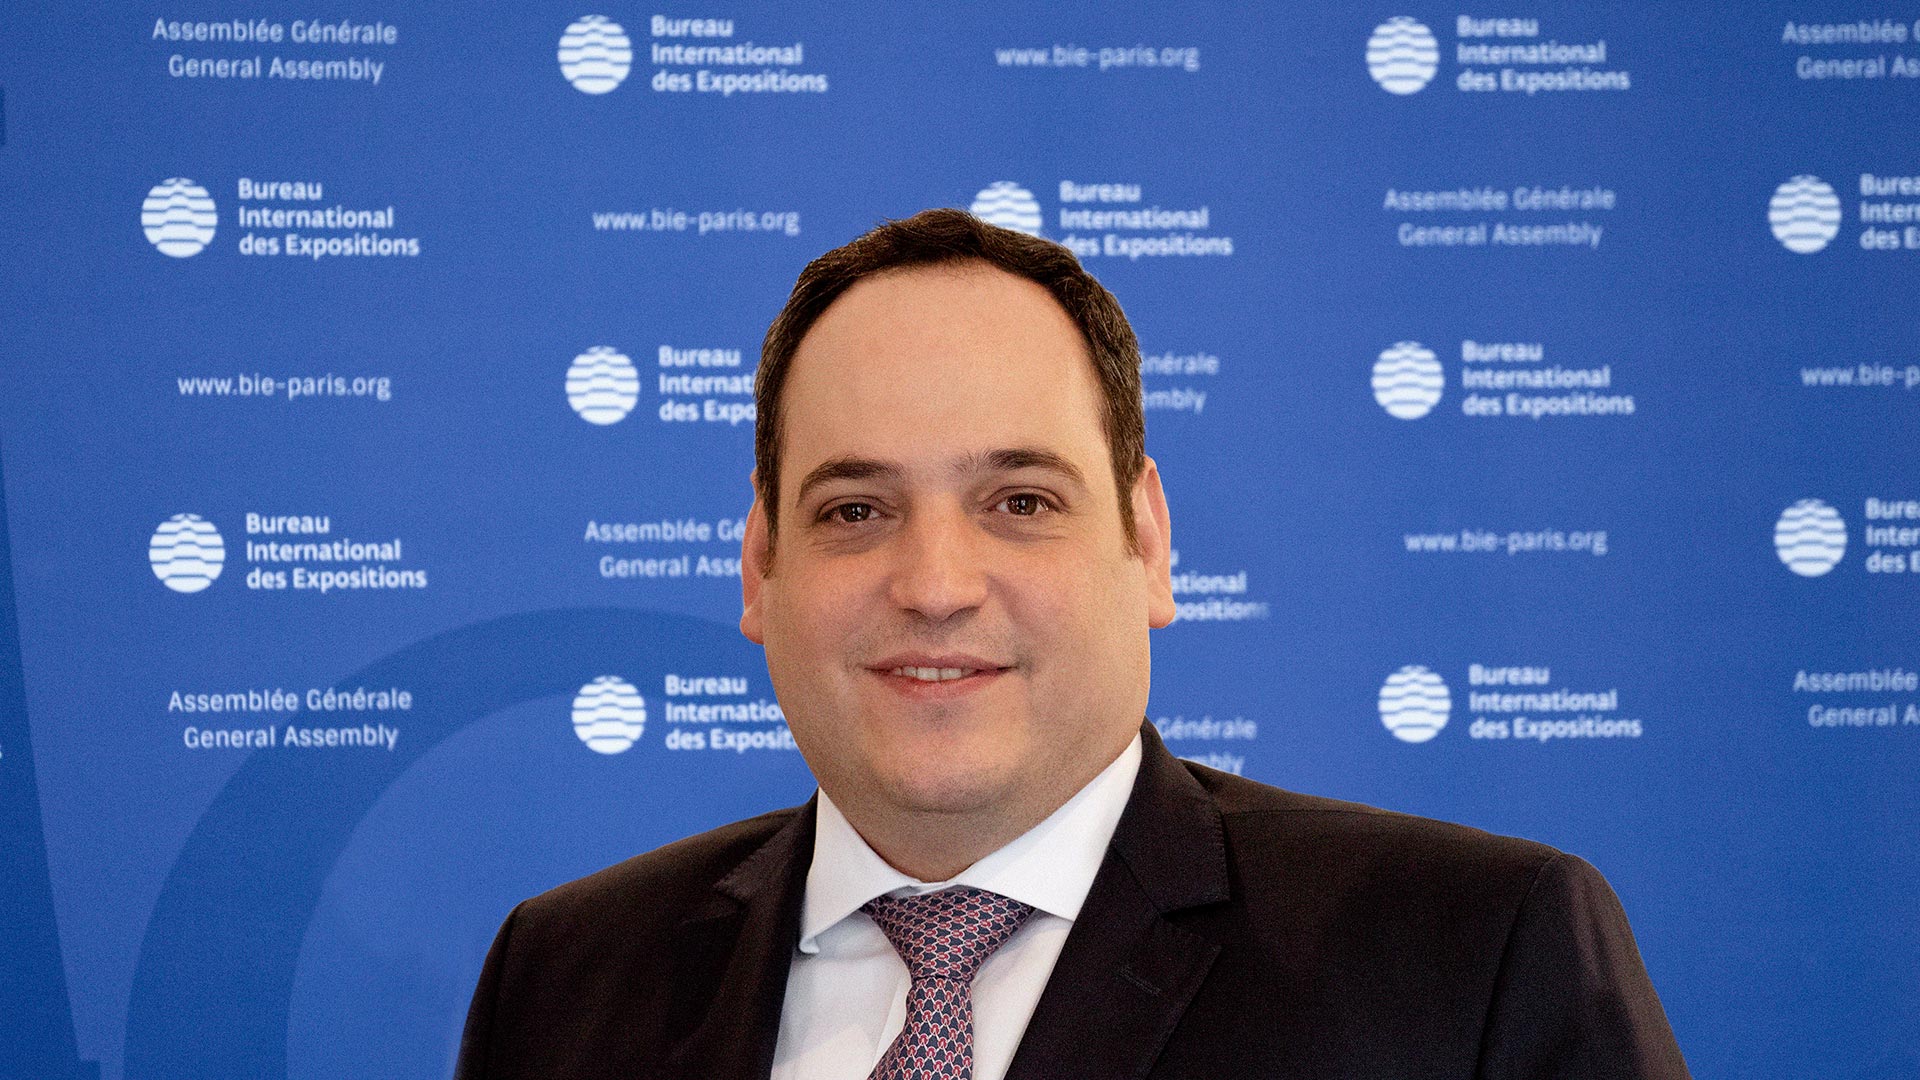 Dimitri Kerkentzes, Secretary General of the Bureau International des Expositions (BIE)